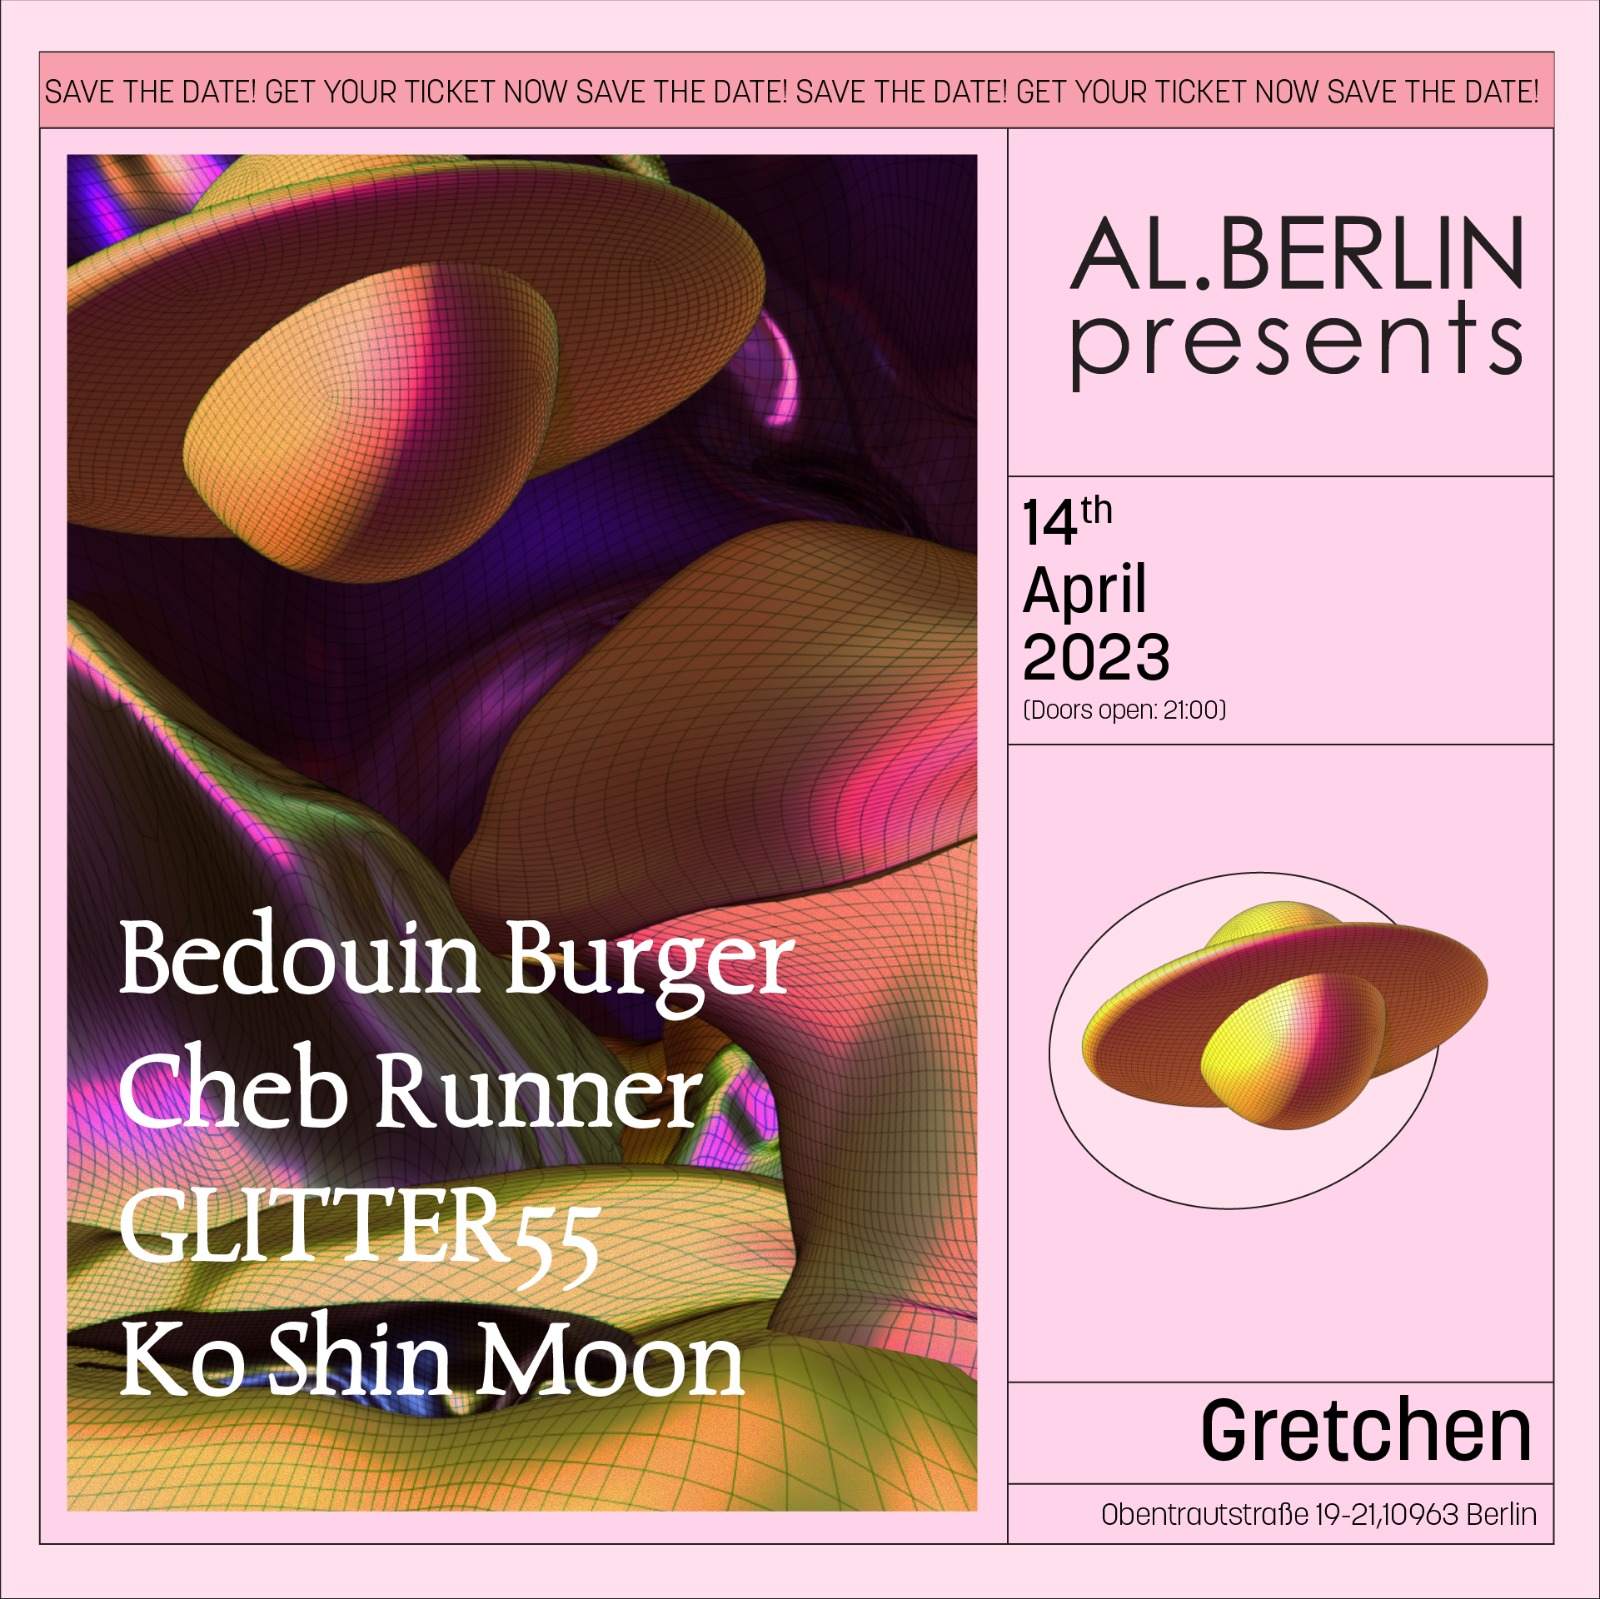 AL.Berlin presents: Bedouin Burger - Cheb Runner - GLITTER55 - Ko